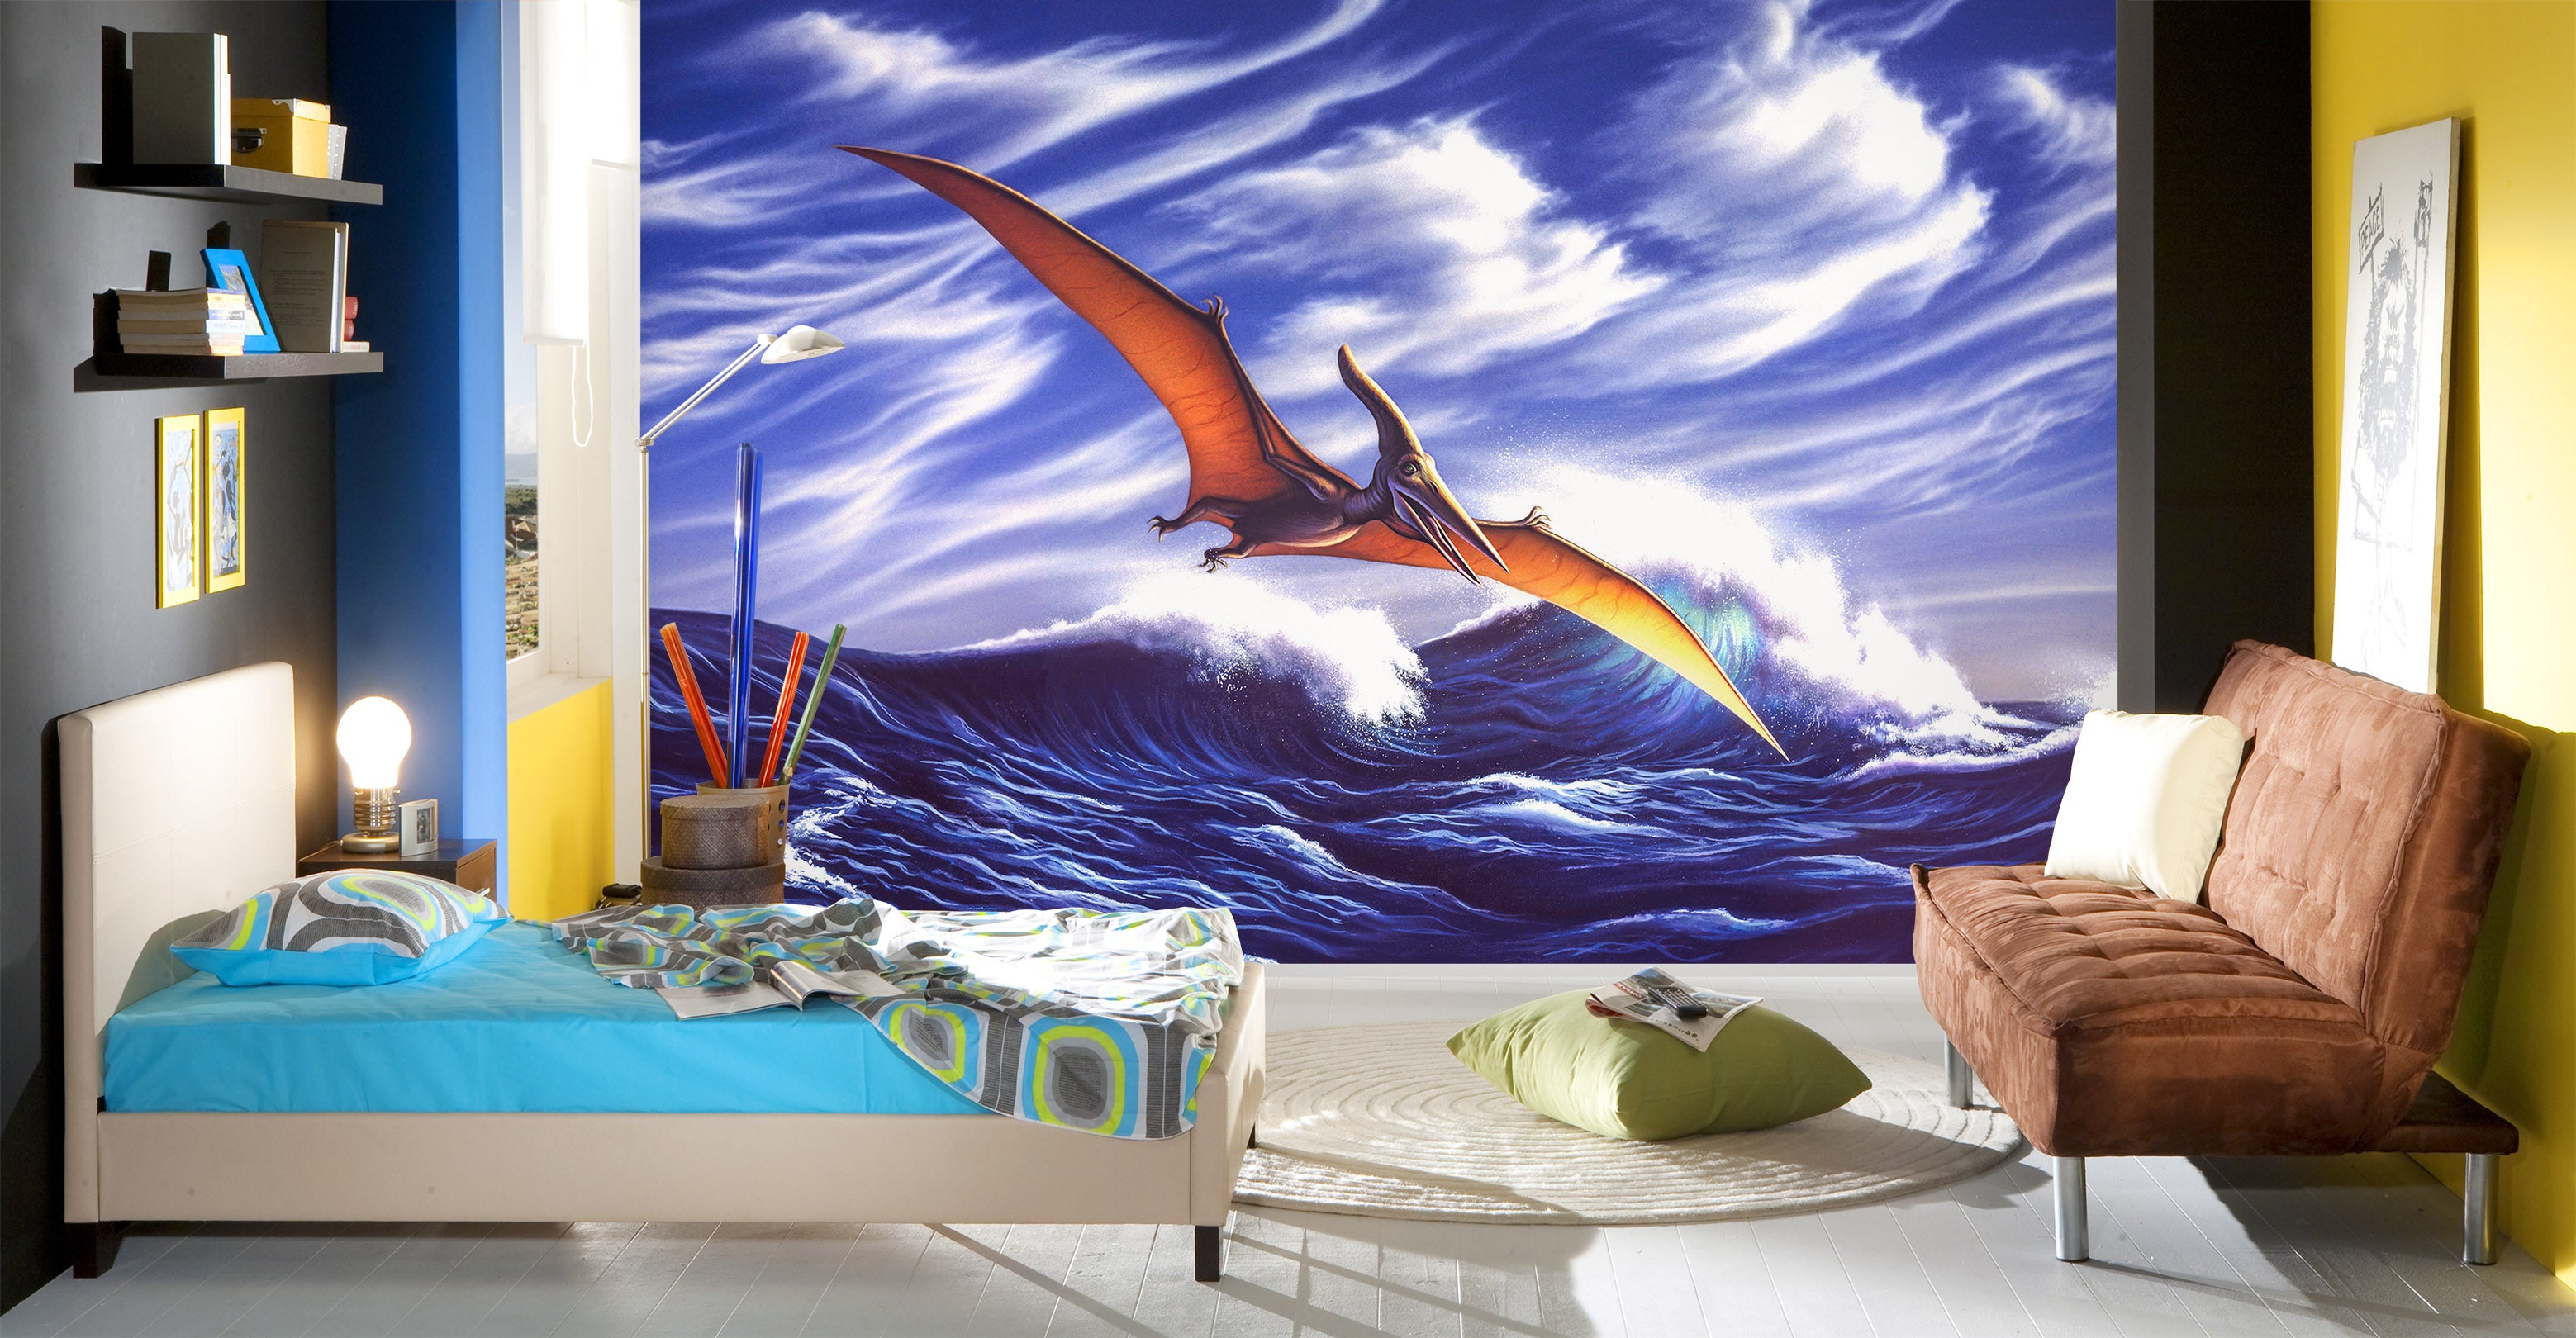 3D Pteranadon 85022 Jerry LoFaro Wall Mural Wall Murals